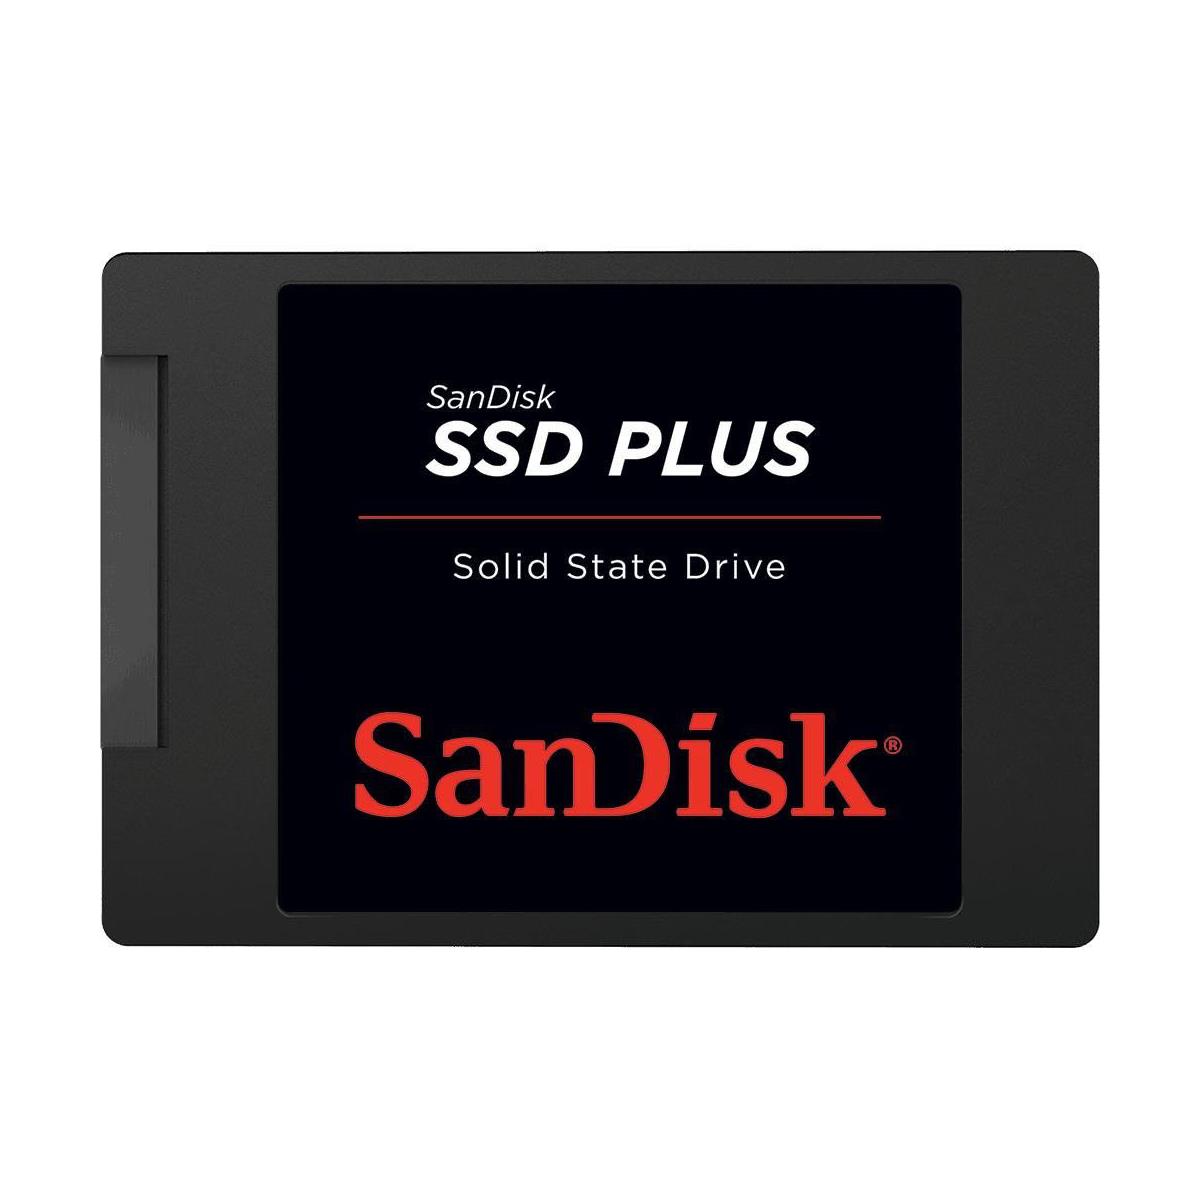 1TB SanDisk SSD Plus SATA III 2.5" Internal SSD $75 + free s/h at Adorama